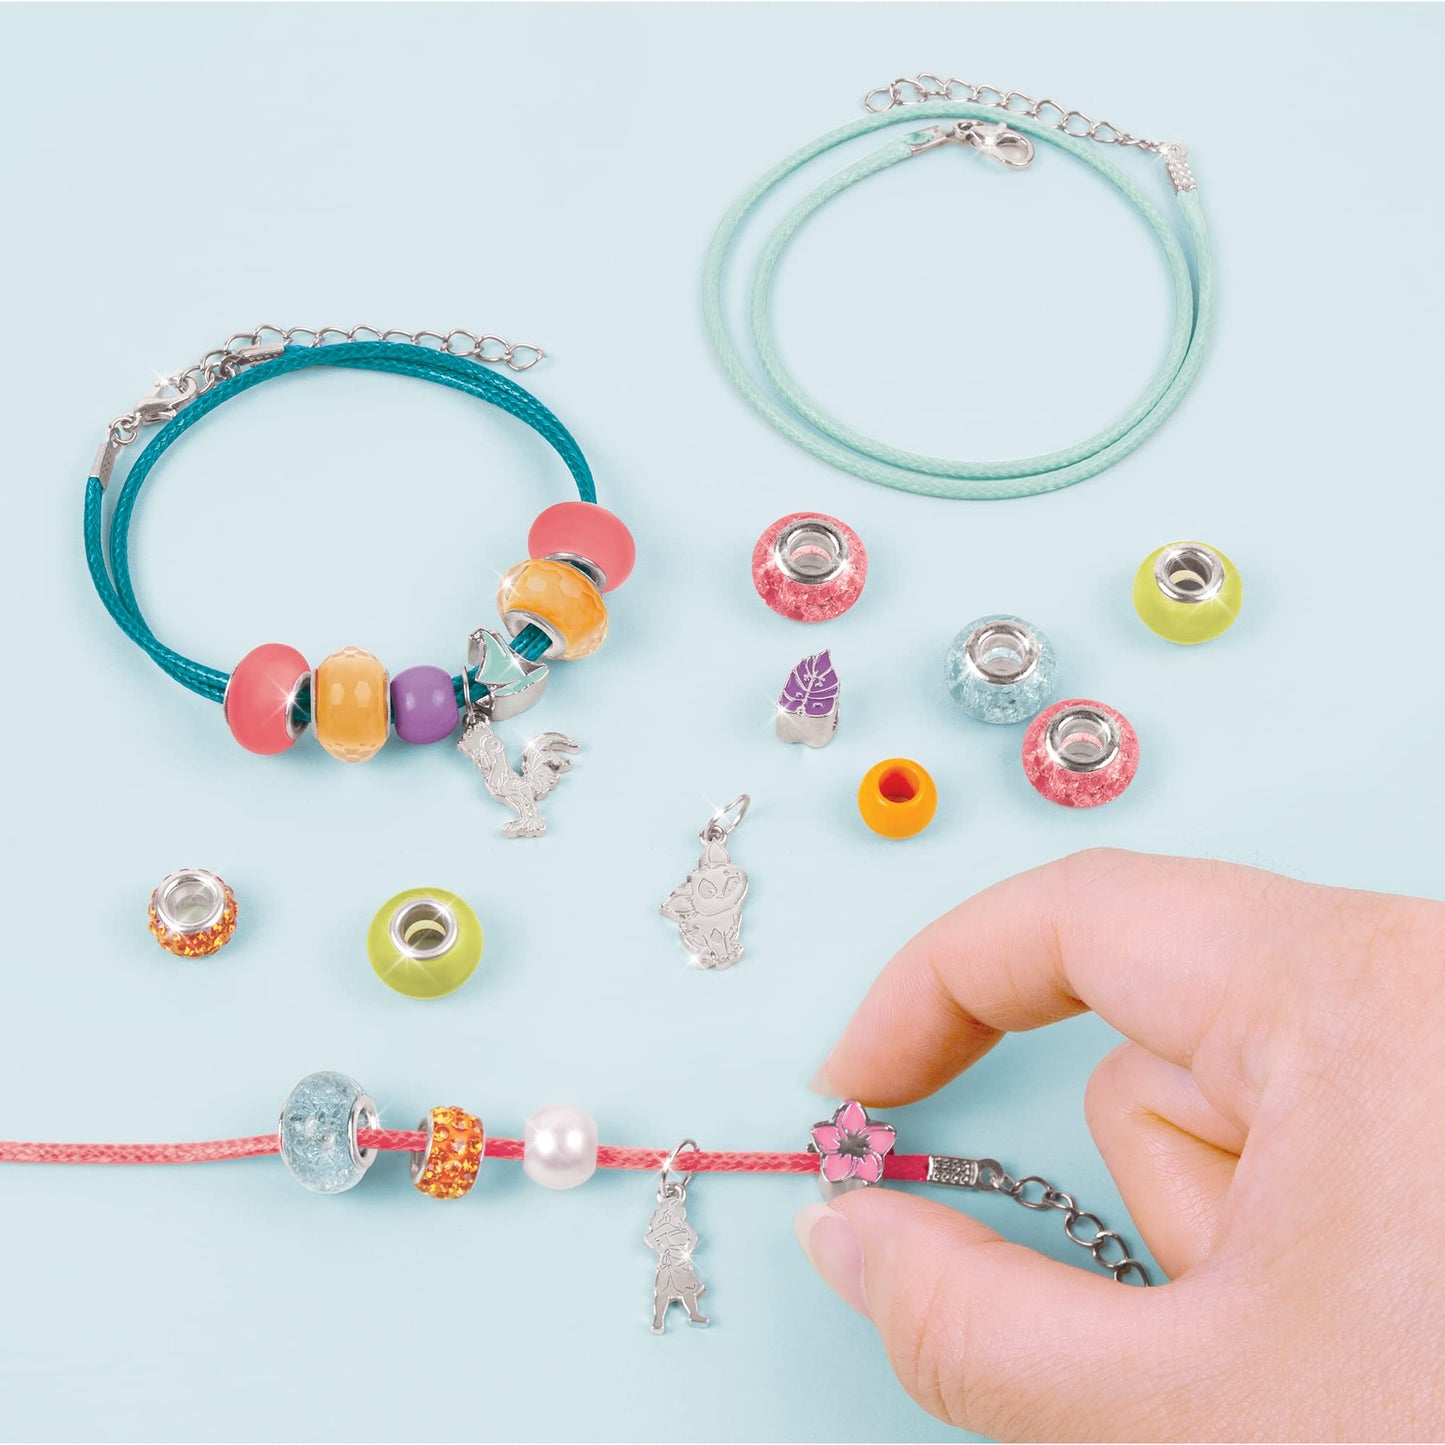 Make It Real Disney Princess Moana Jewels & Gems - Moana Charm Bracelet Making Kit for Girls - Moana Craft & Activity Set for Kids - Disney Jewelry Making Kit for Girls 8-10-12-14